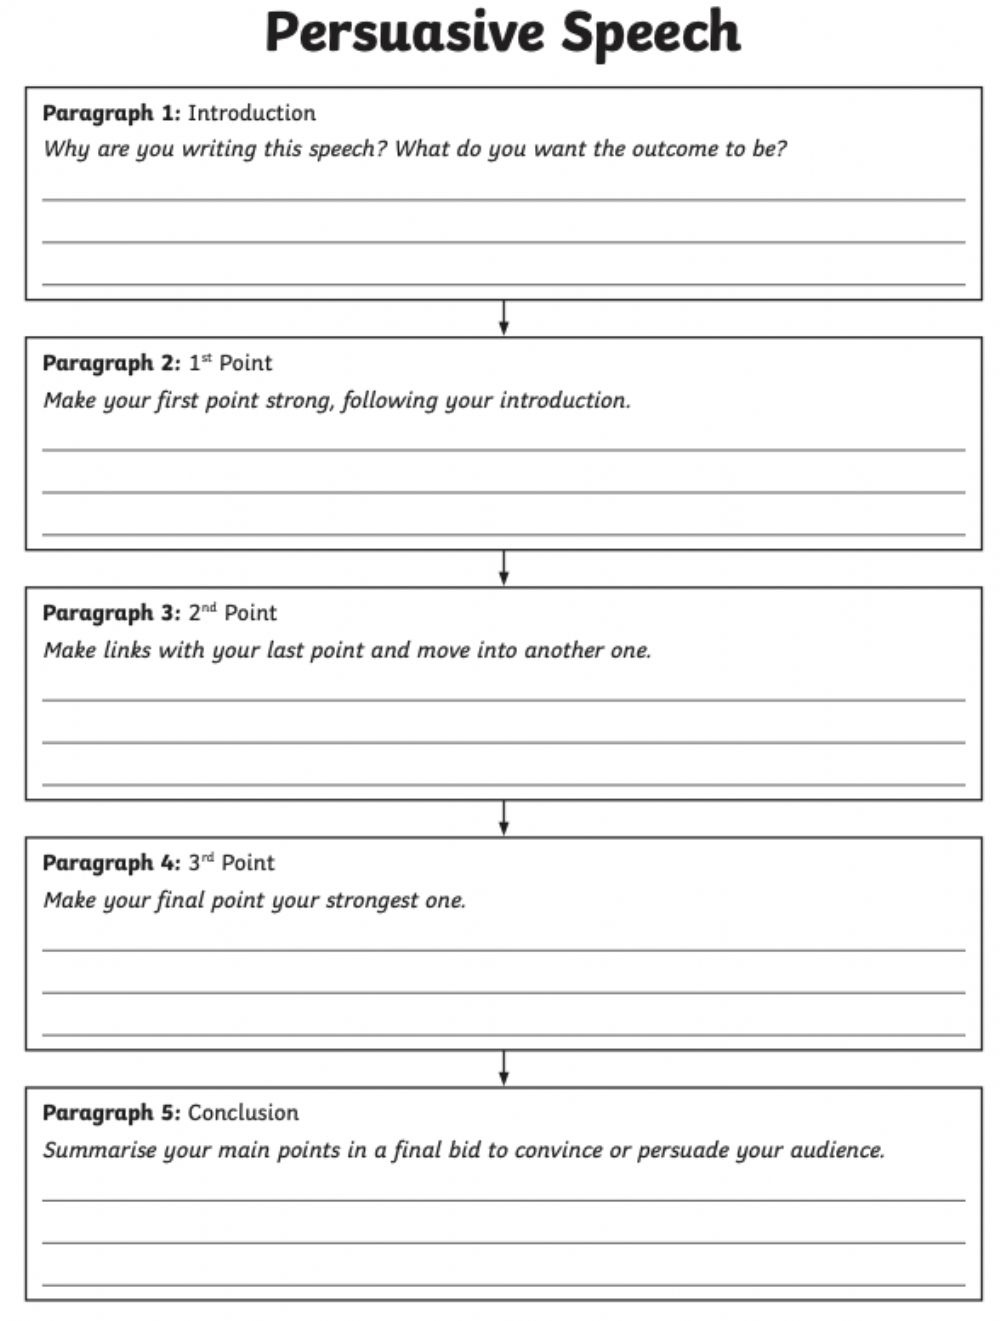 Persuasive Speech Worksheet